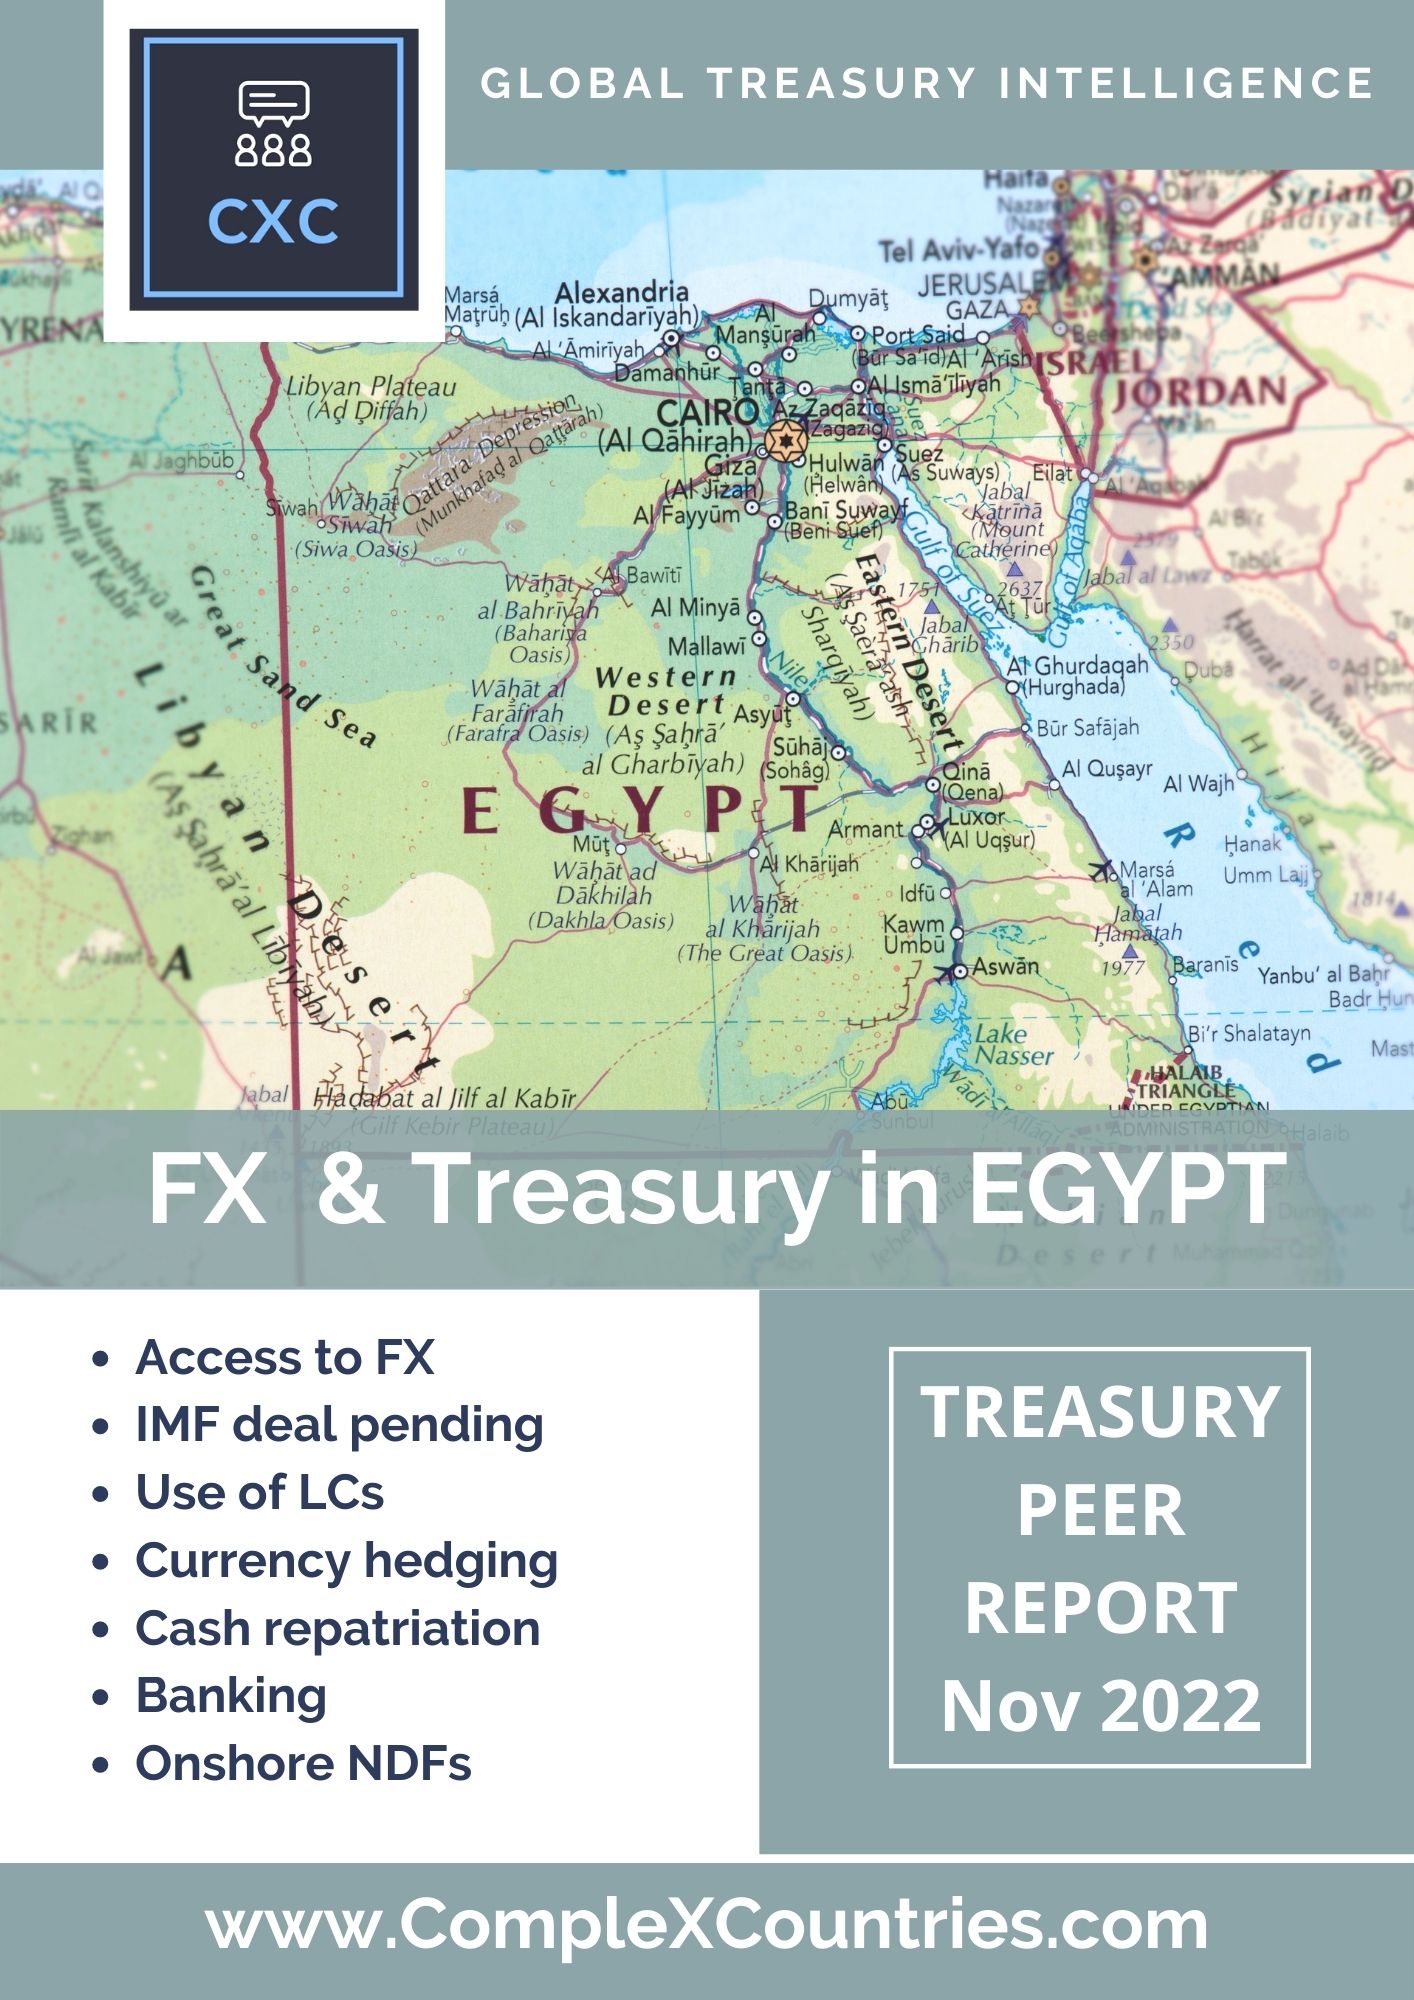 FX & Treasury in Egypt